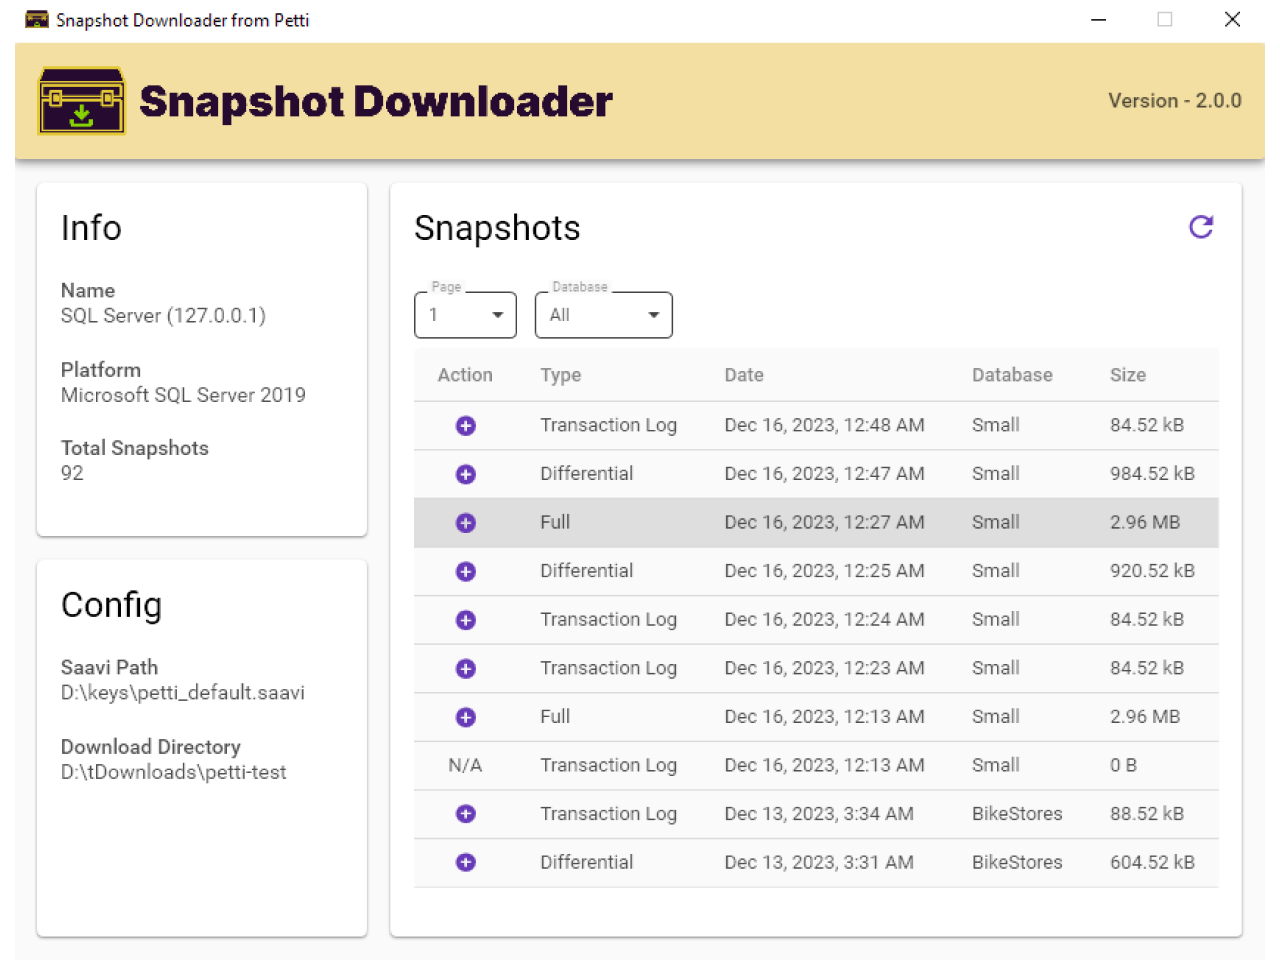 Petti Snapshot Downloader (Windows) - List Snapshots